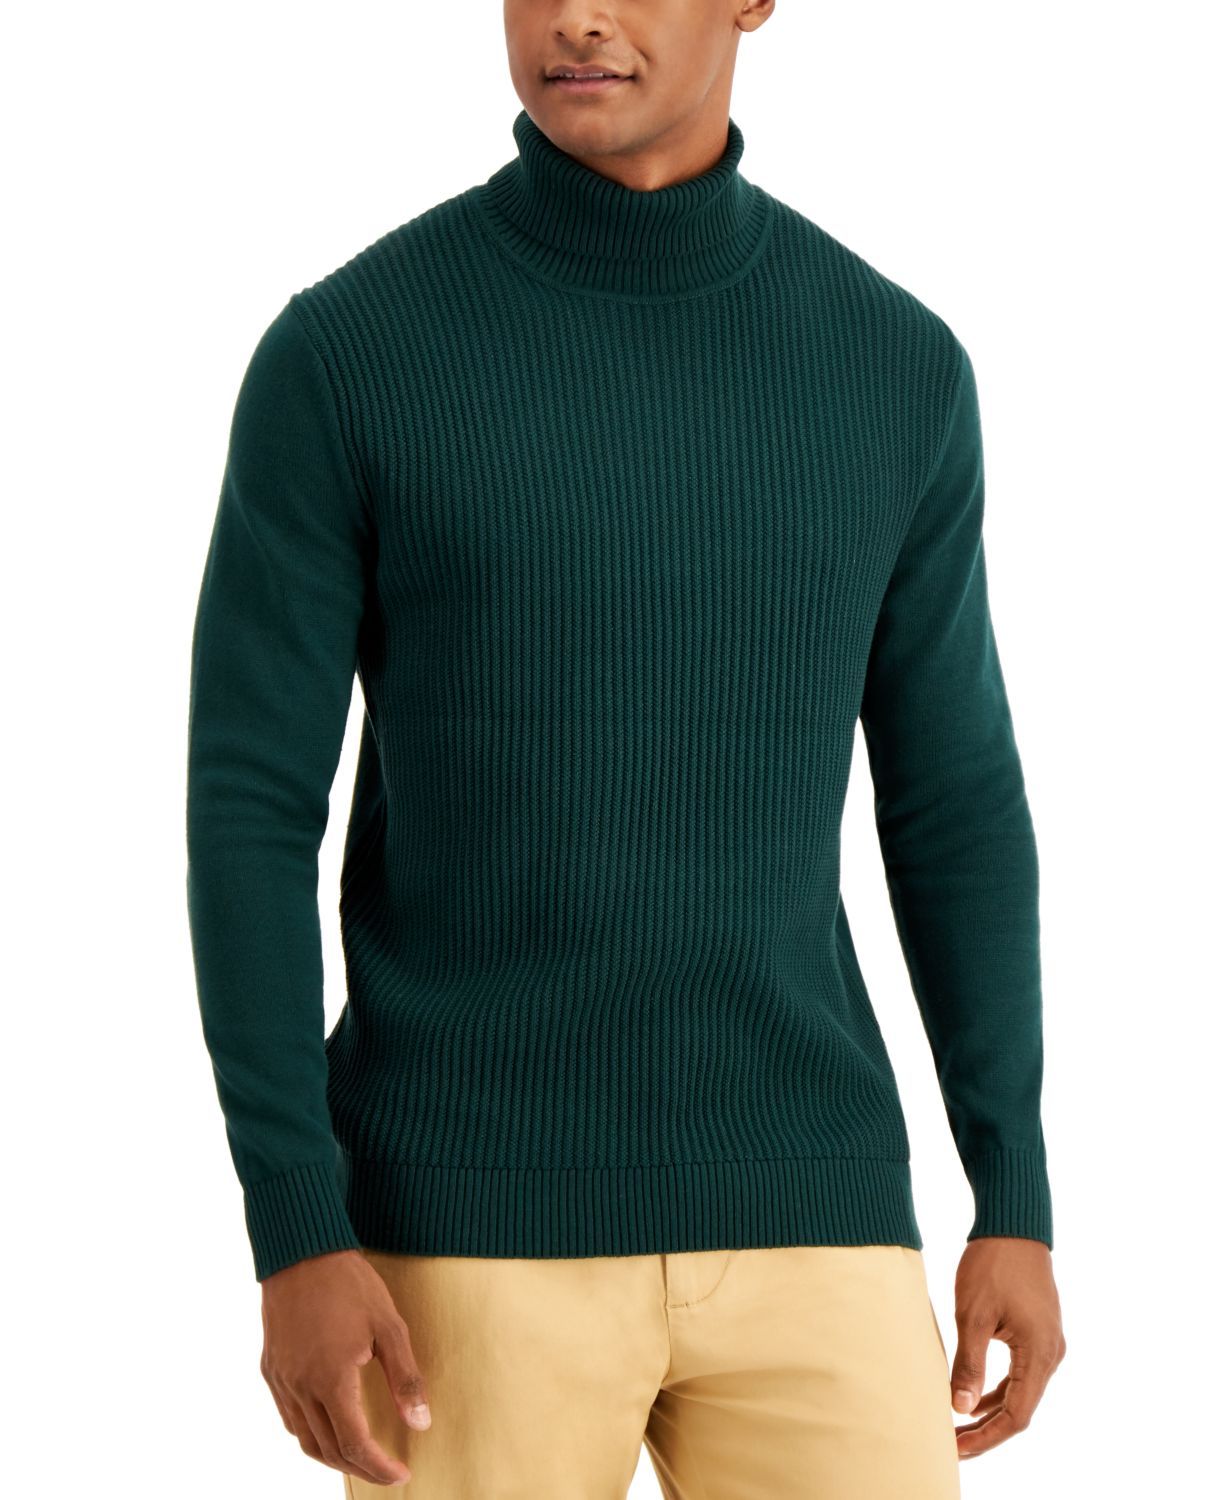 Mens Black Turtleneck Sweater Cheap Sellers, Save 65% | jlcatj.gob.mx